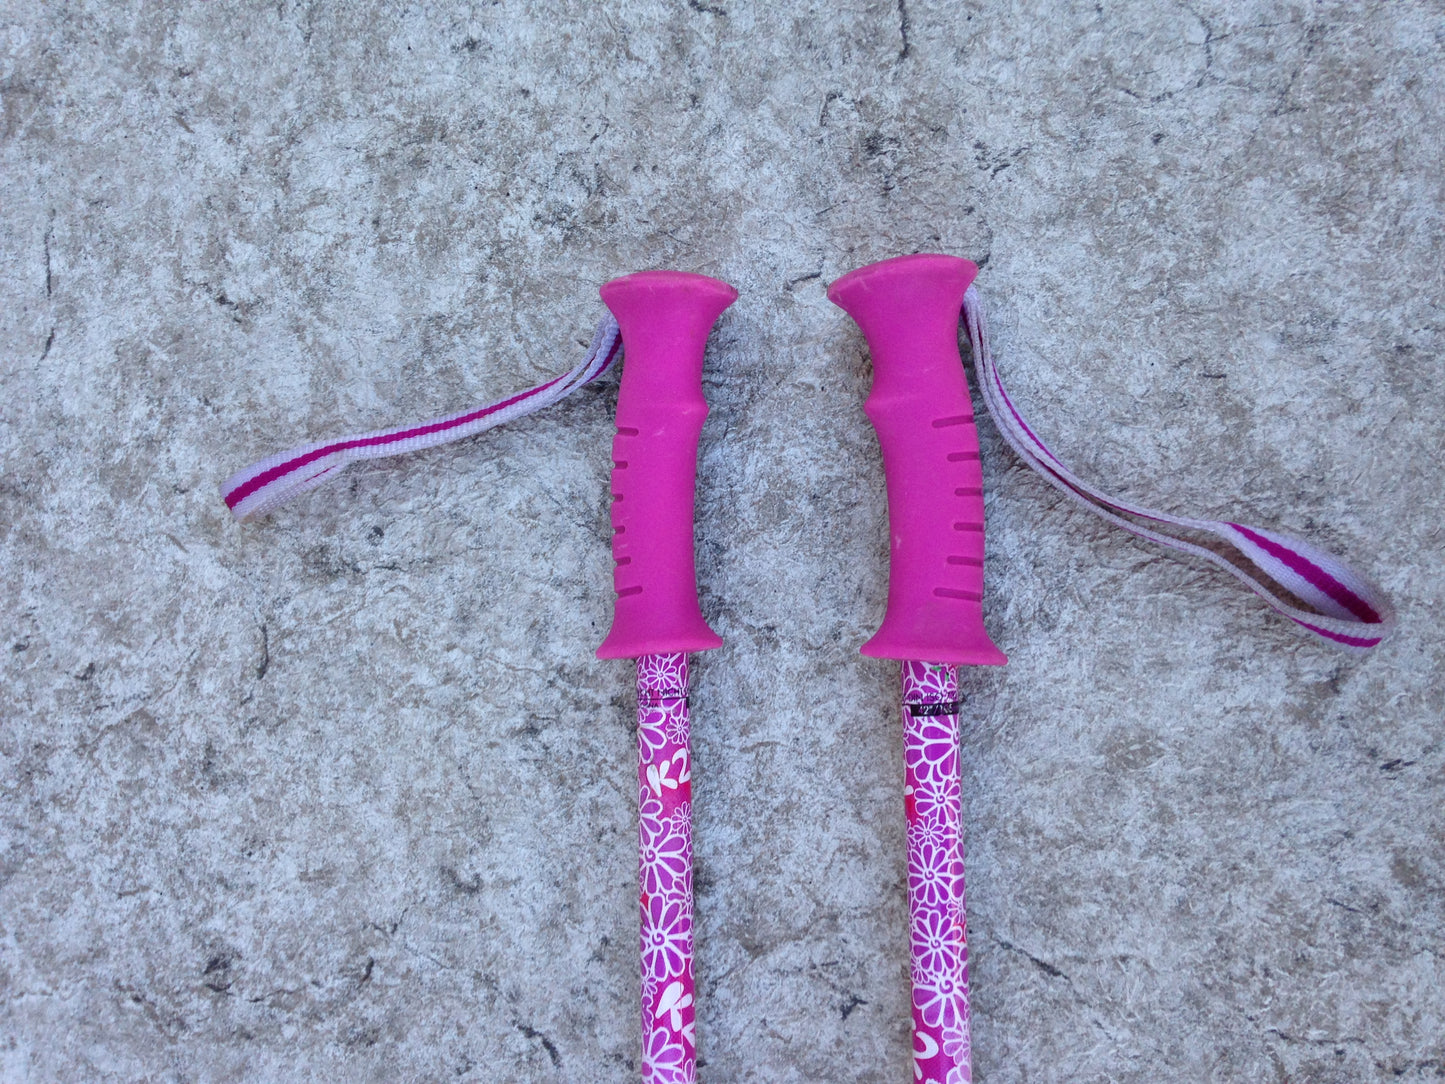 Ski Poles Child Size 42 inch K-2 Pink Daisy Rubber Handles